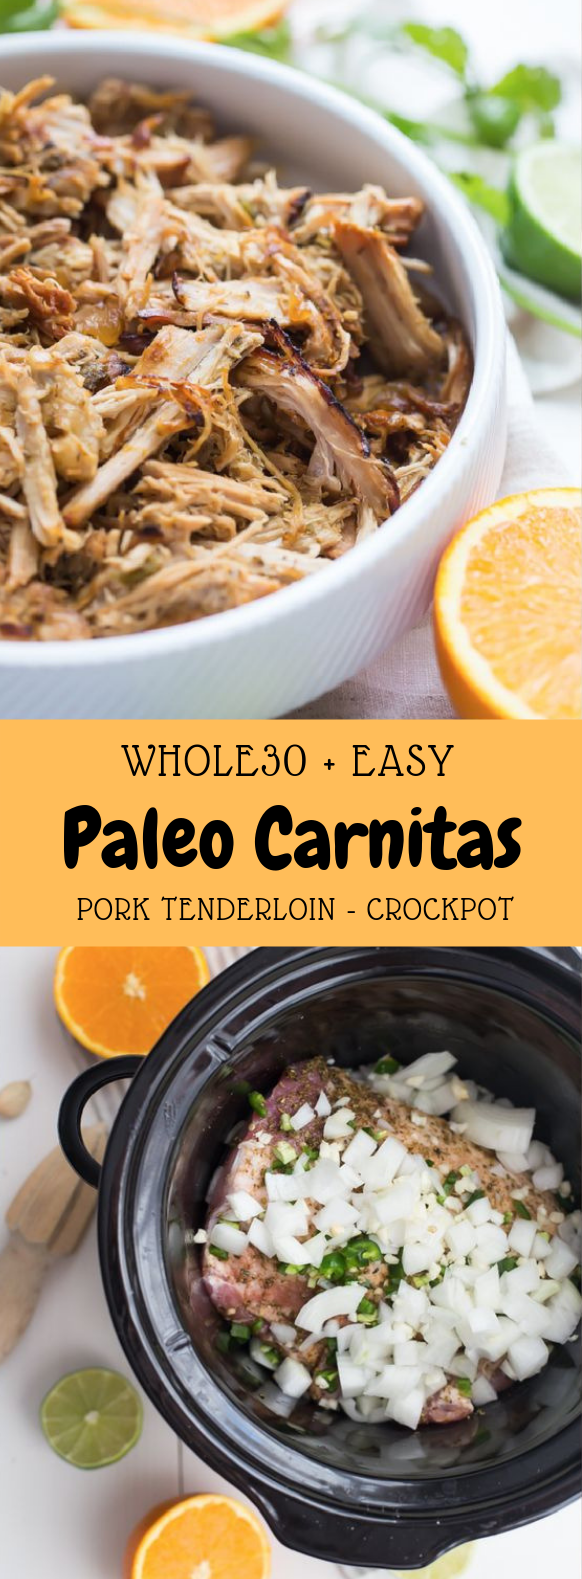 Crockpot Carnitas with Pork Tenderloin or Loin (Paleo, Whole30) #Paleo #HealthyFood